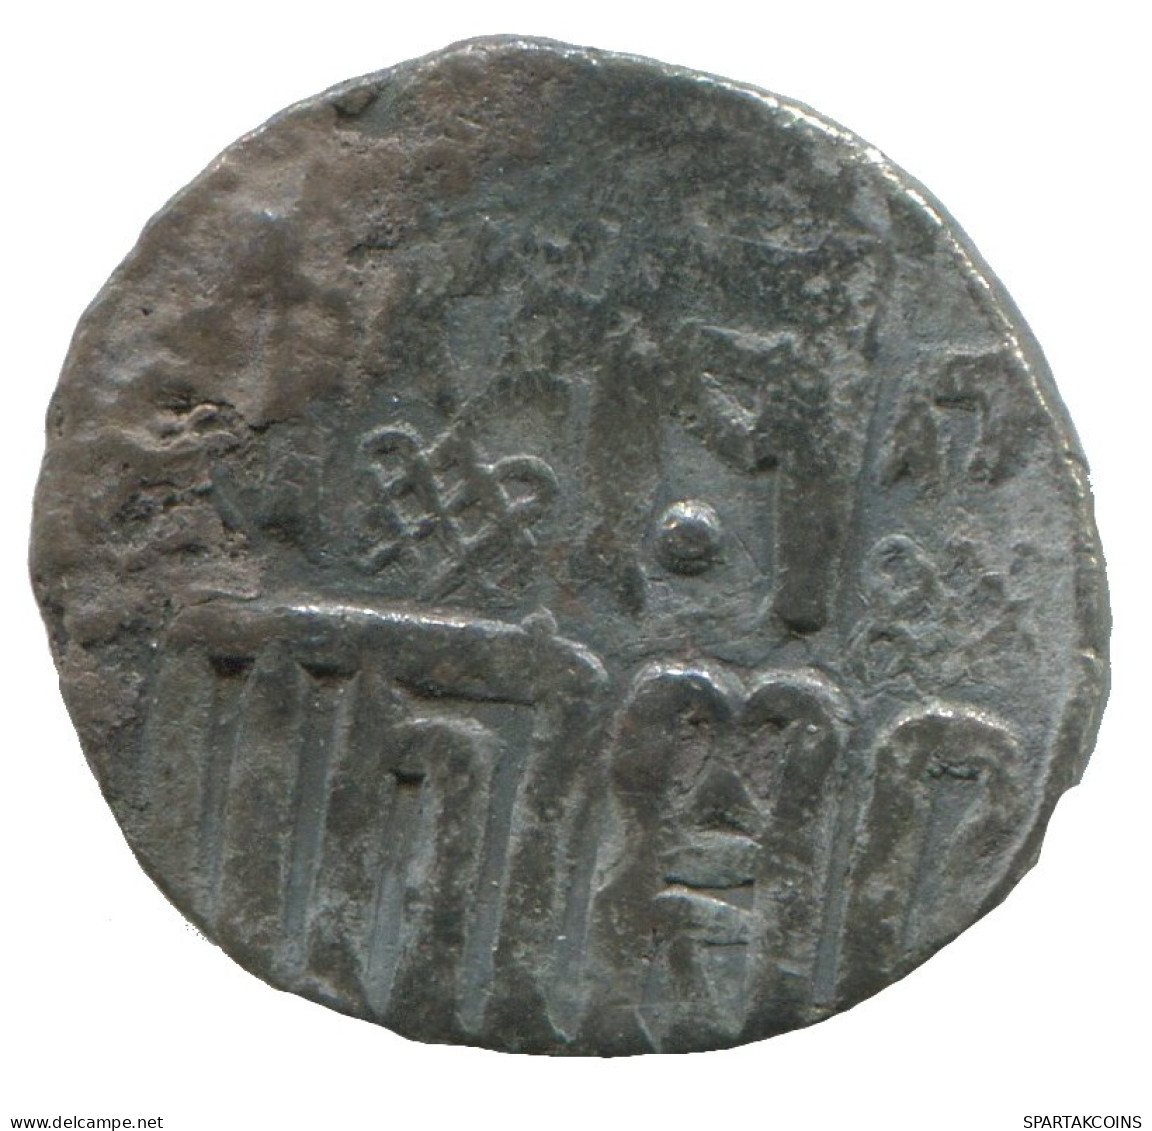 GOLDEN HORDE Silver Dirham Medieval Islamic Coin 1.5g/17mm #NNN2003.8.U.A - Islamische Münzen